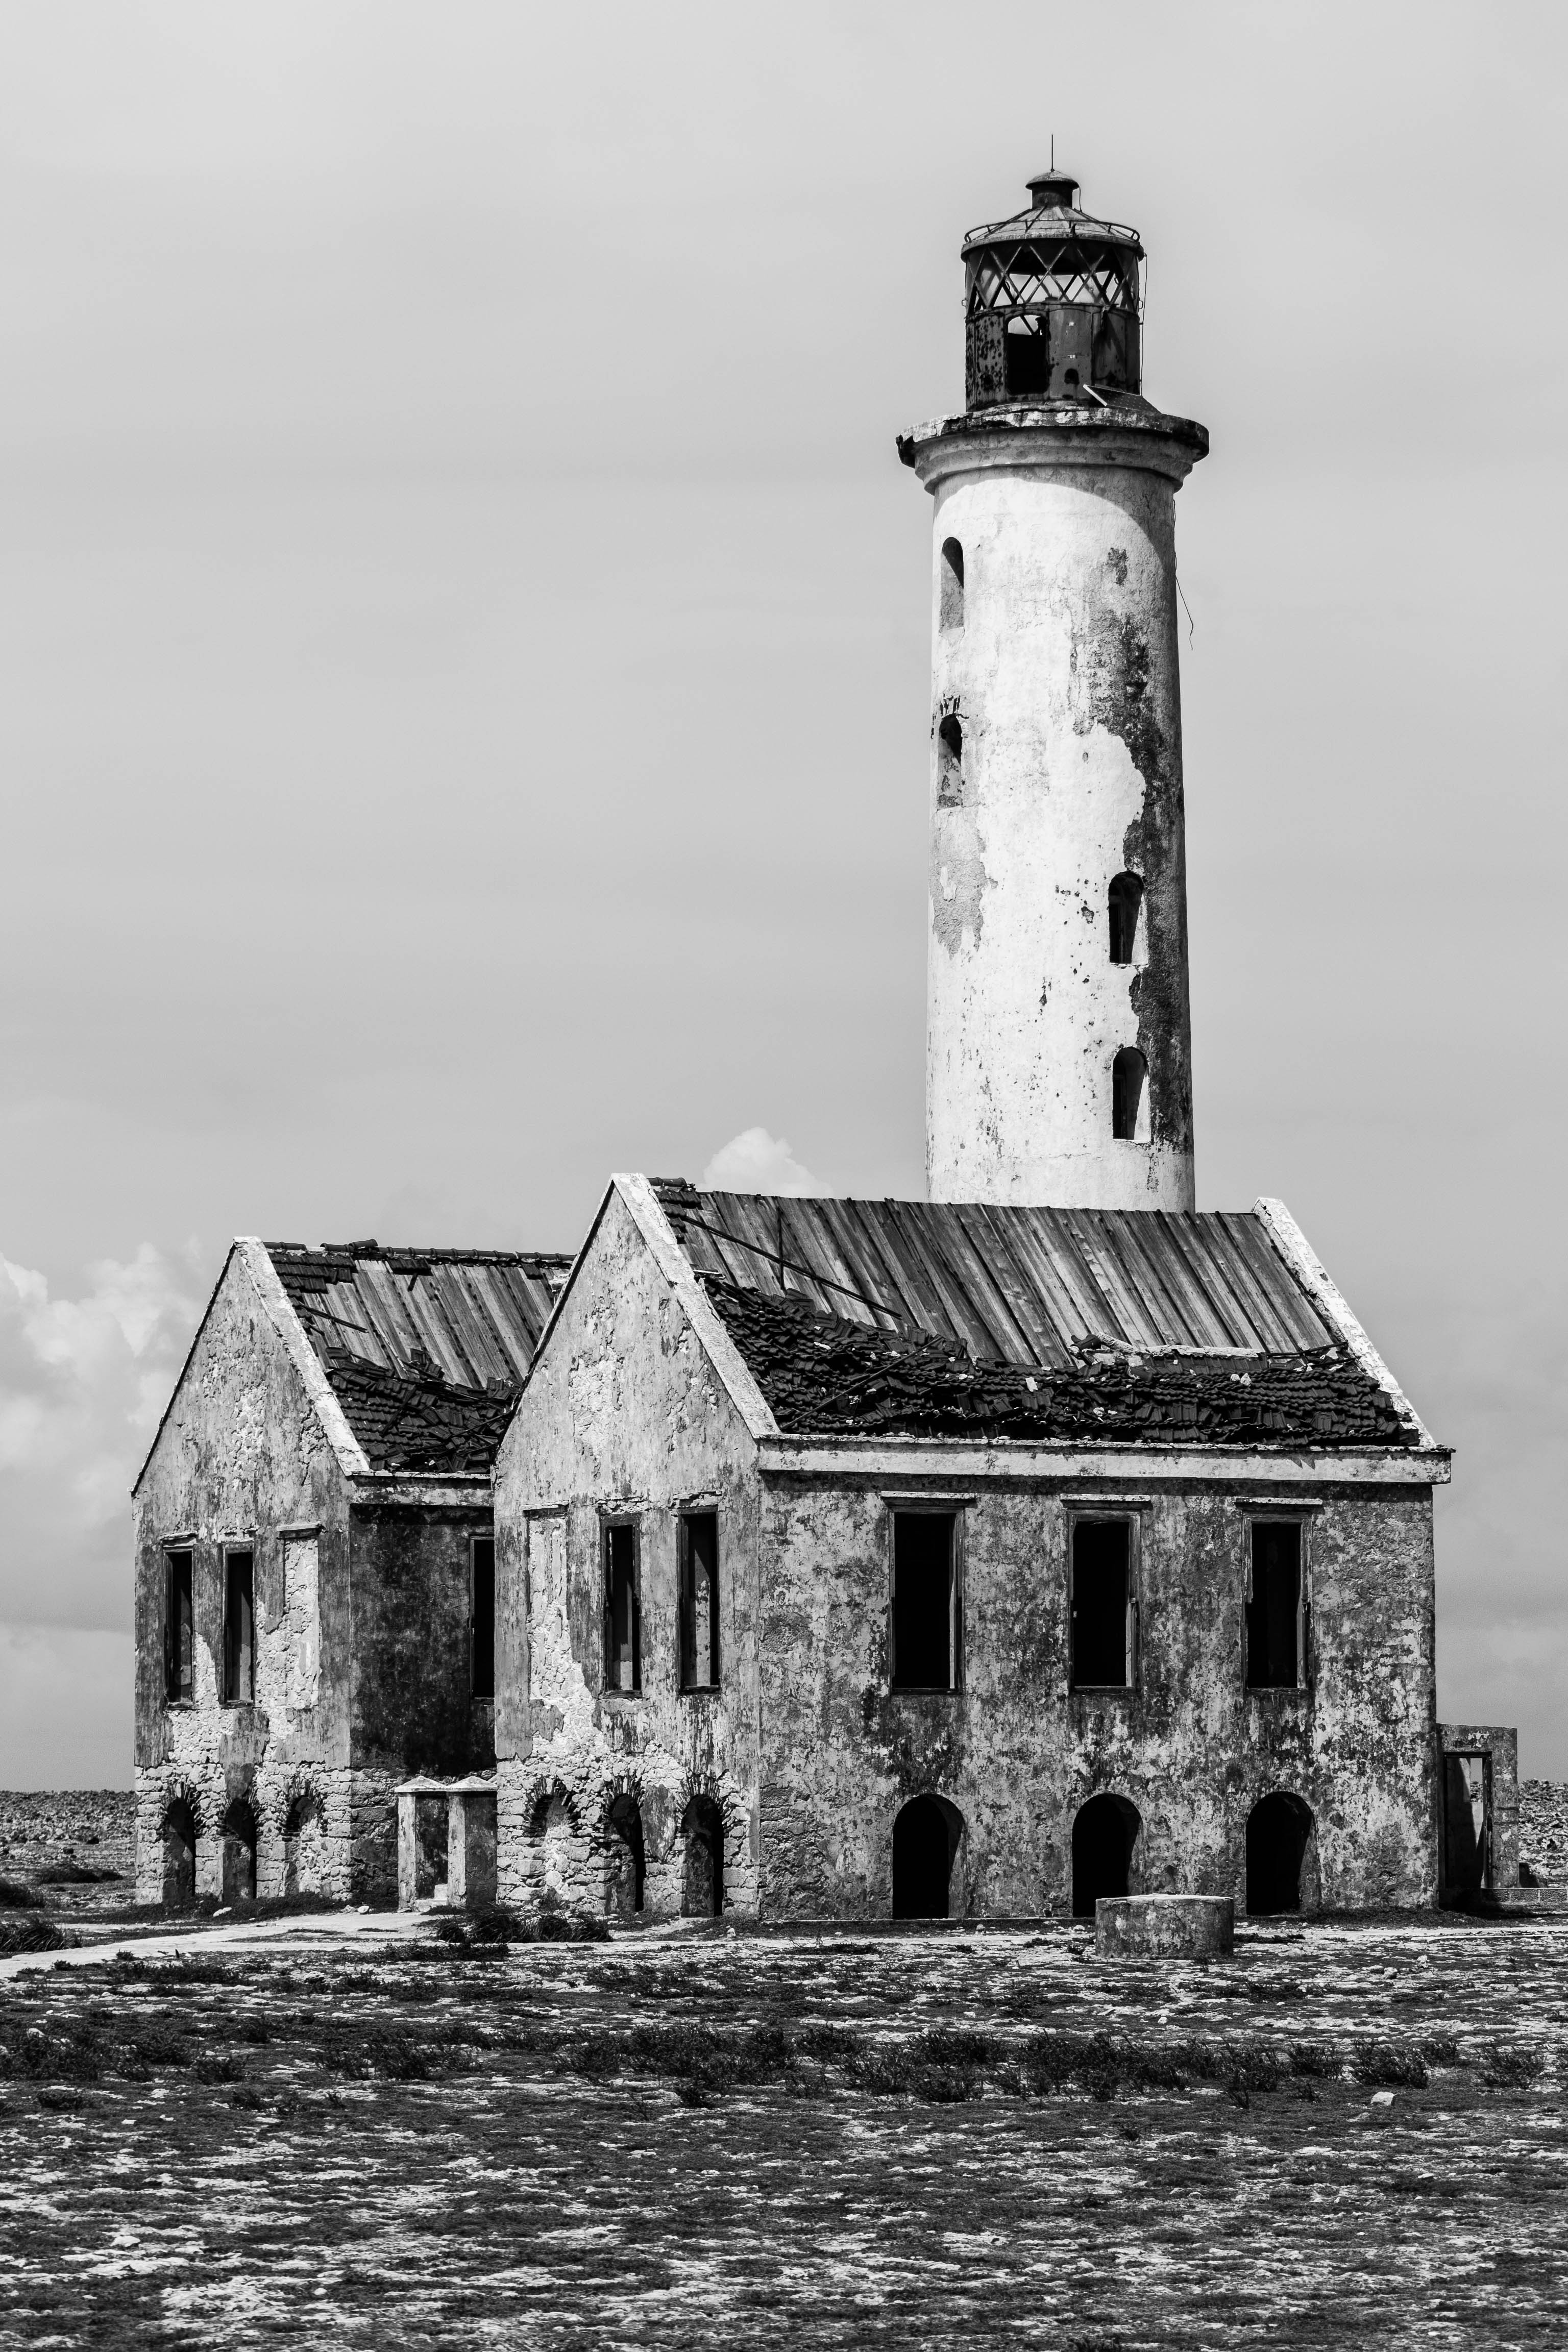 Old Lighthouse - Klein Curacao by ssabbath on DeviantArt